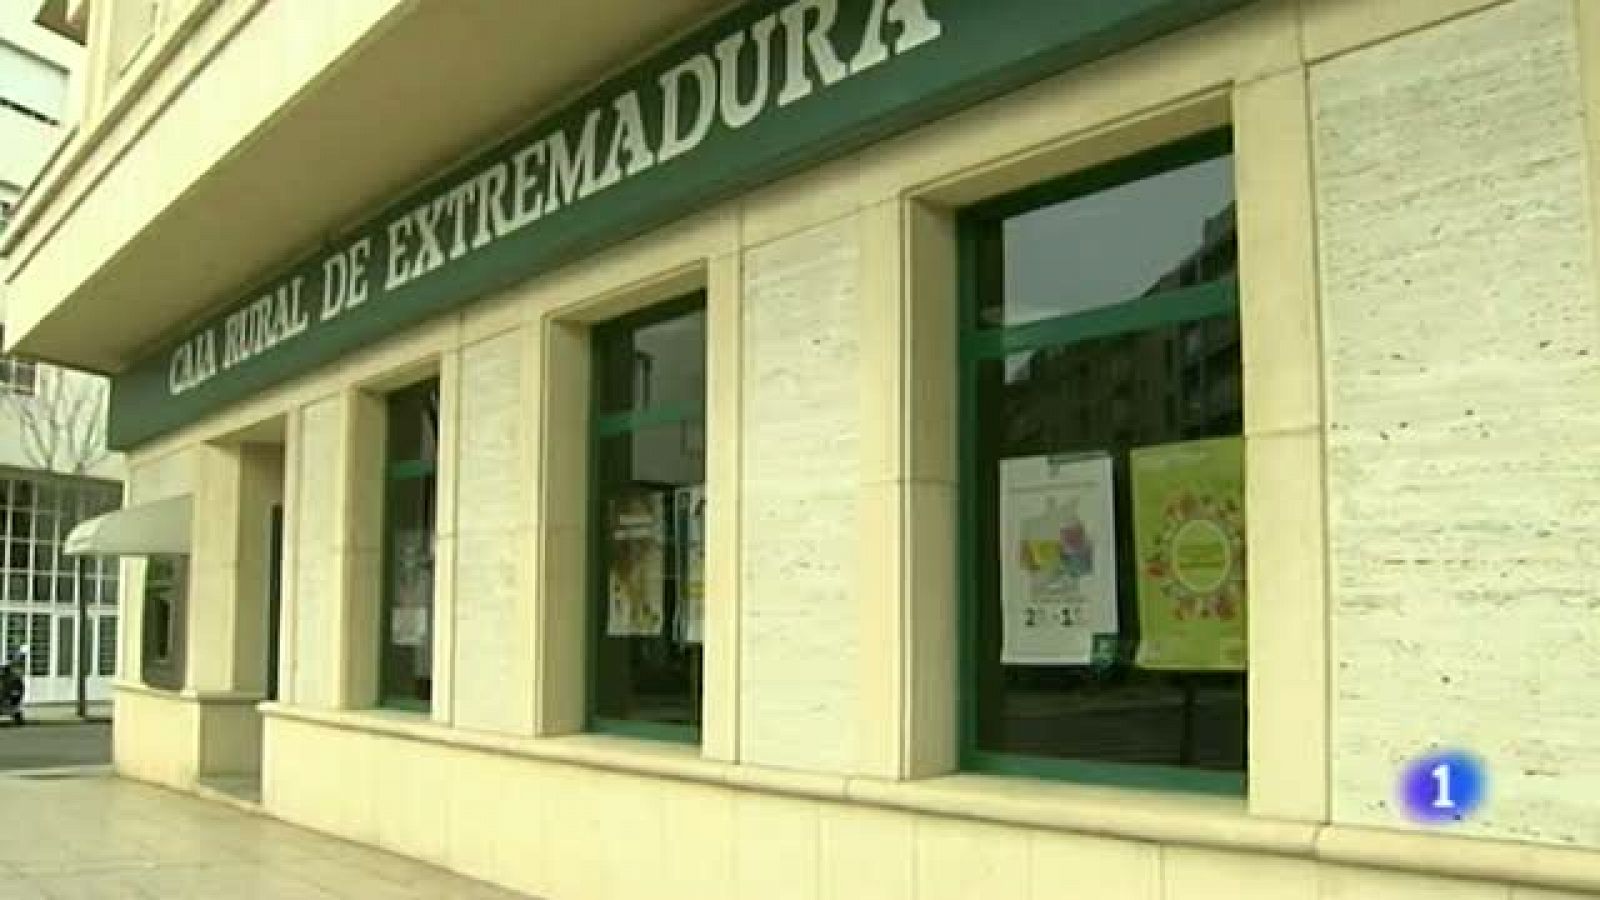 Noticias de Extremadura: Noticias de Extremadura - 19/07/2013 | RTVE Play